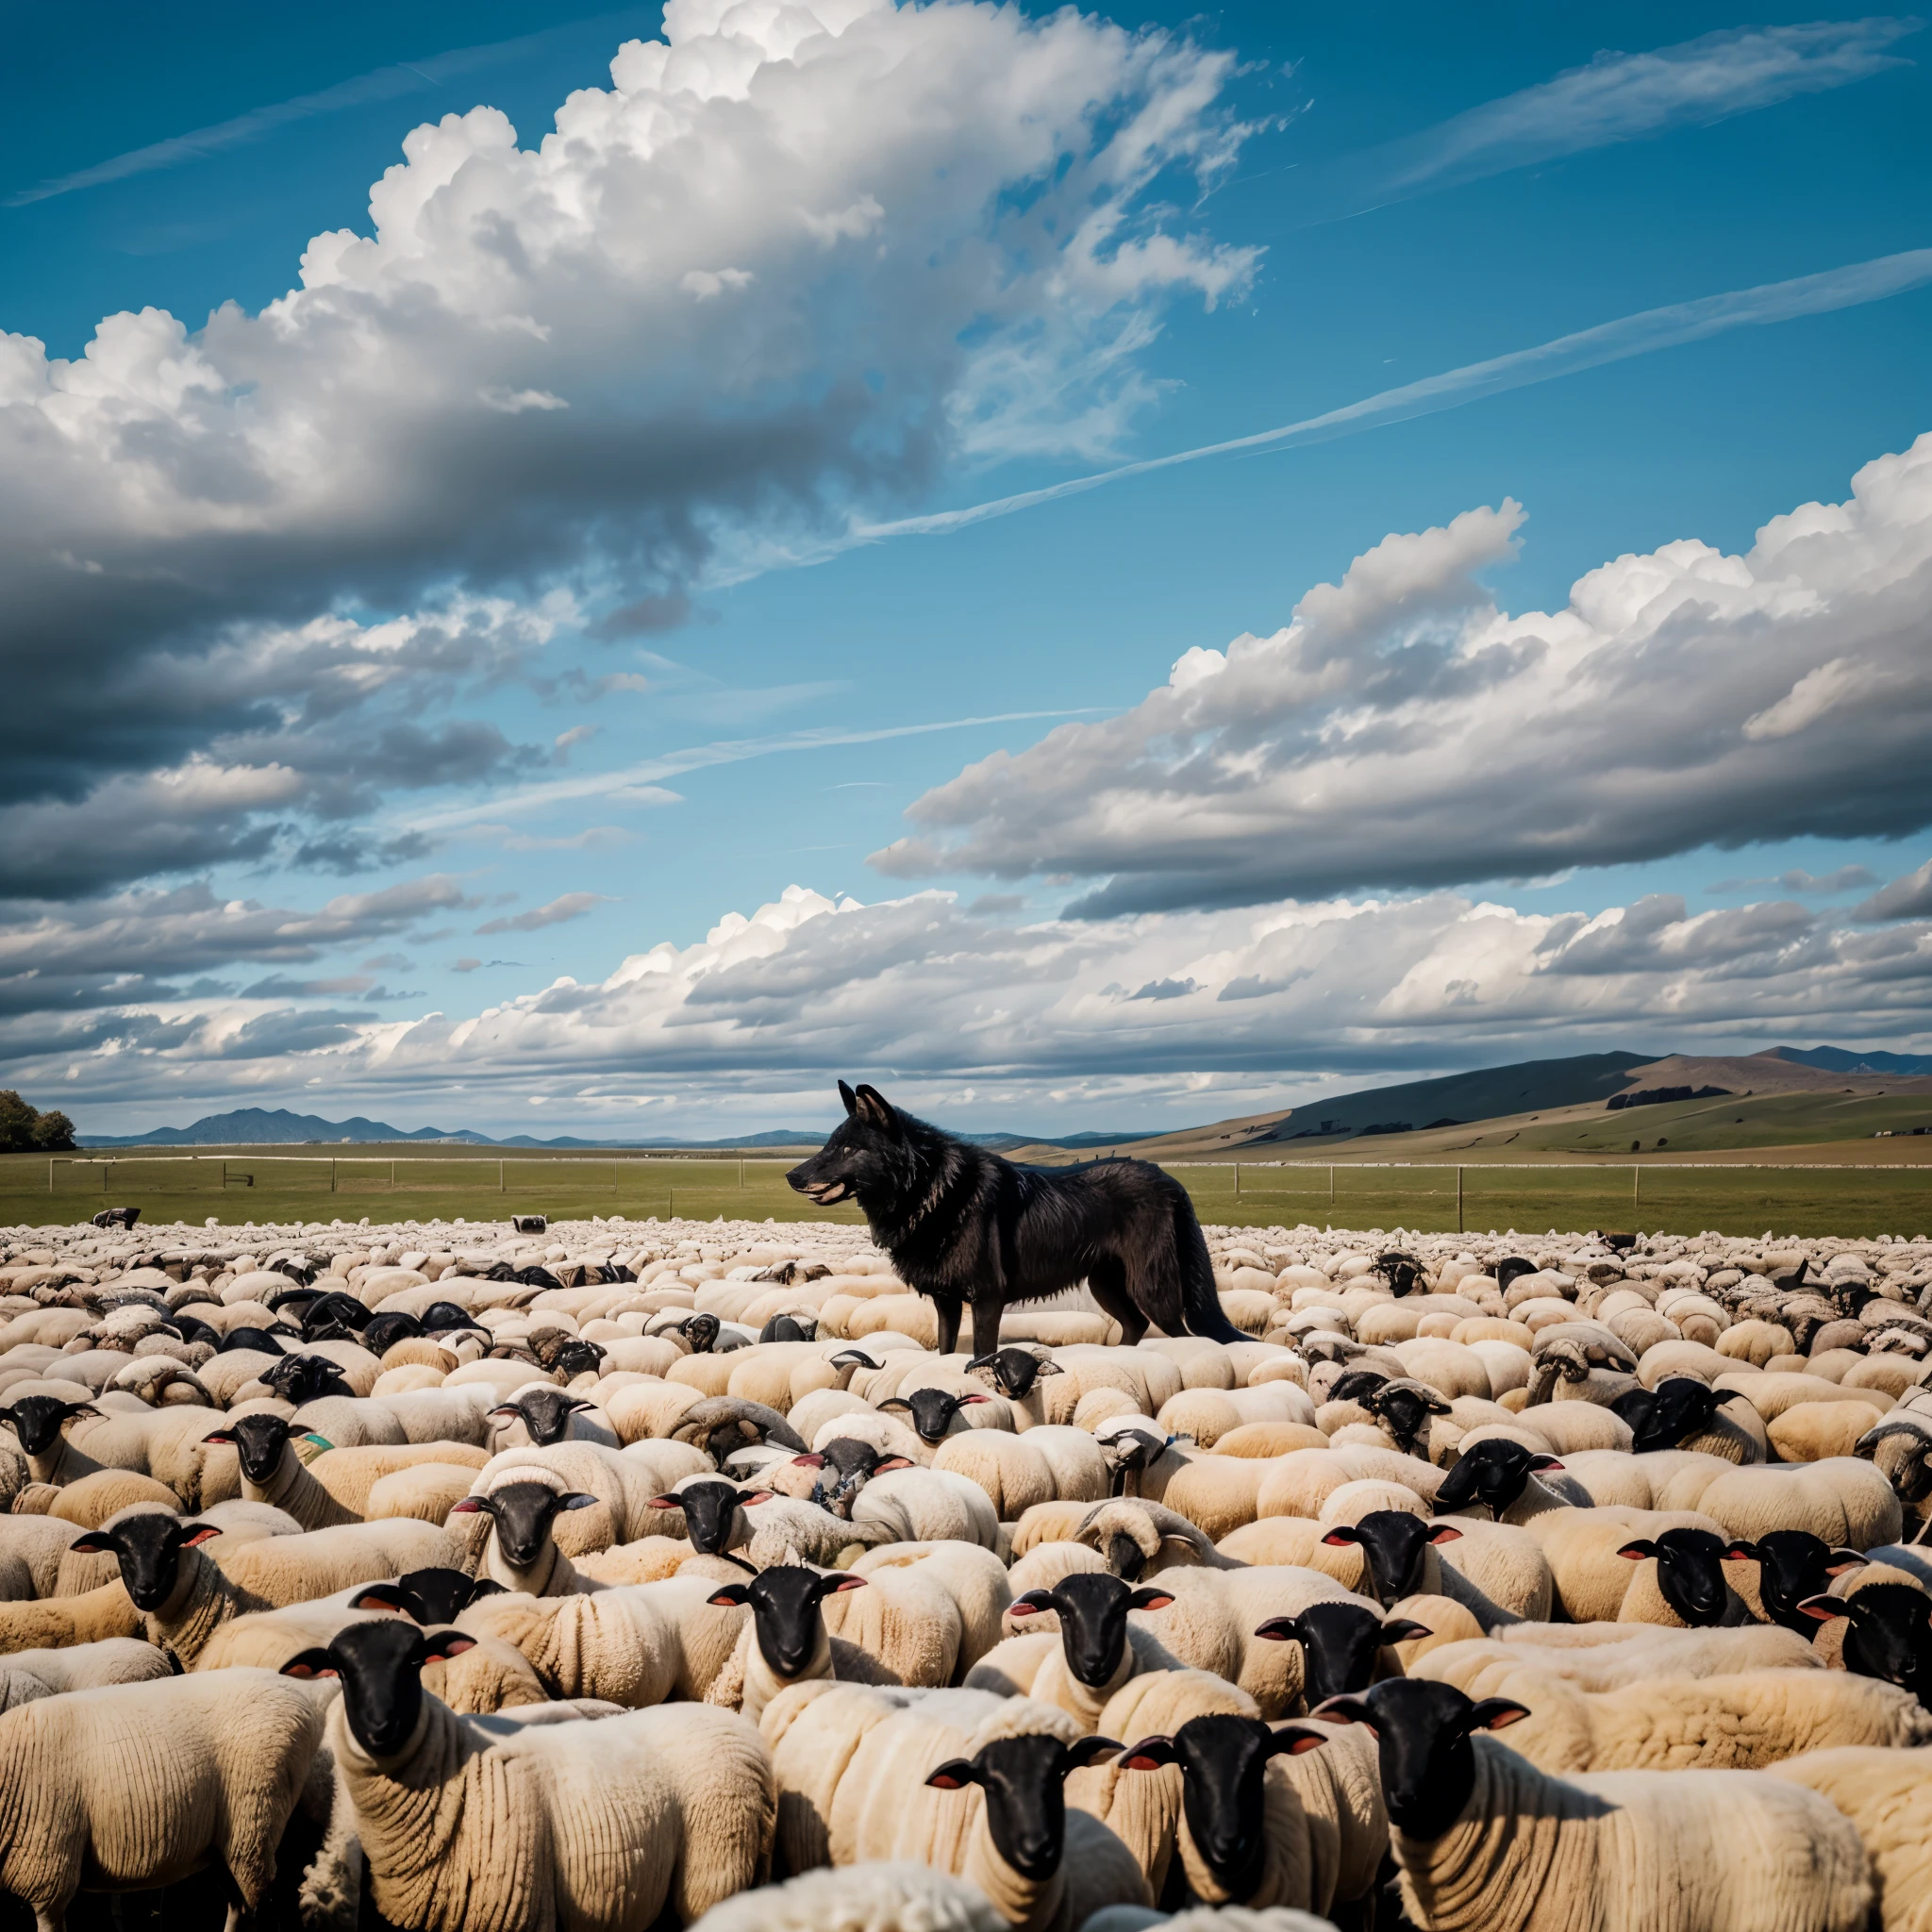 a gigantic black wolf stands in 巨大な白い羊の群れ, 屋外, 晴れ 曇り, (巨大な白い羊の群れ), 細部までこだわった, 写実的な,